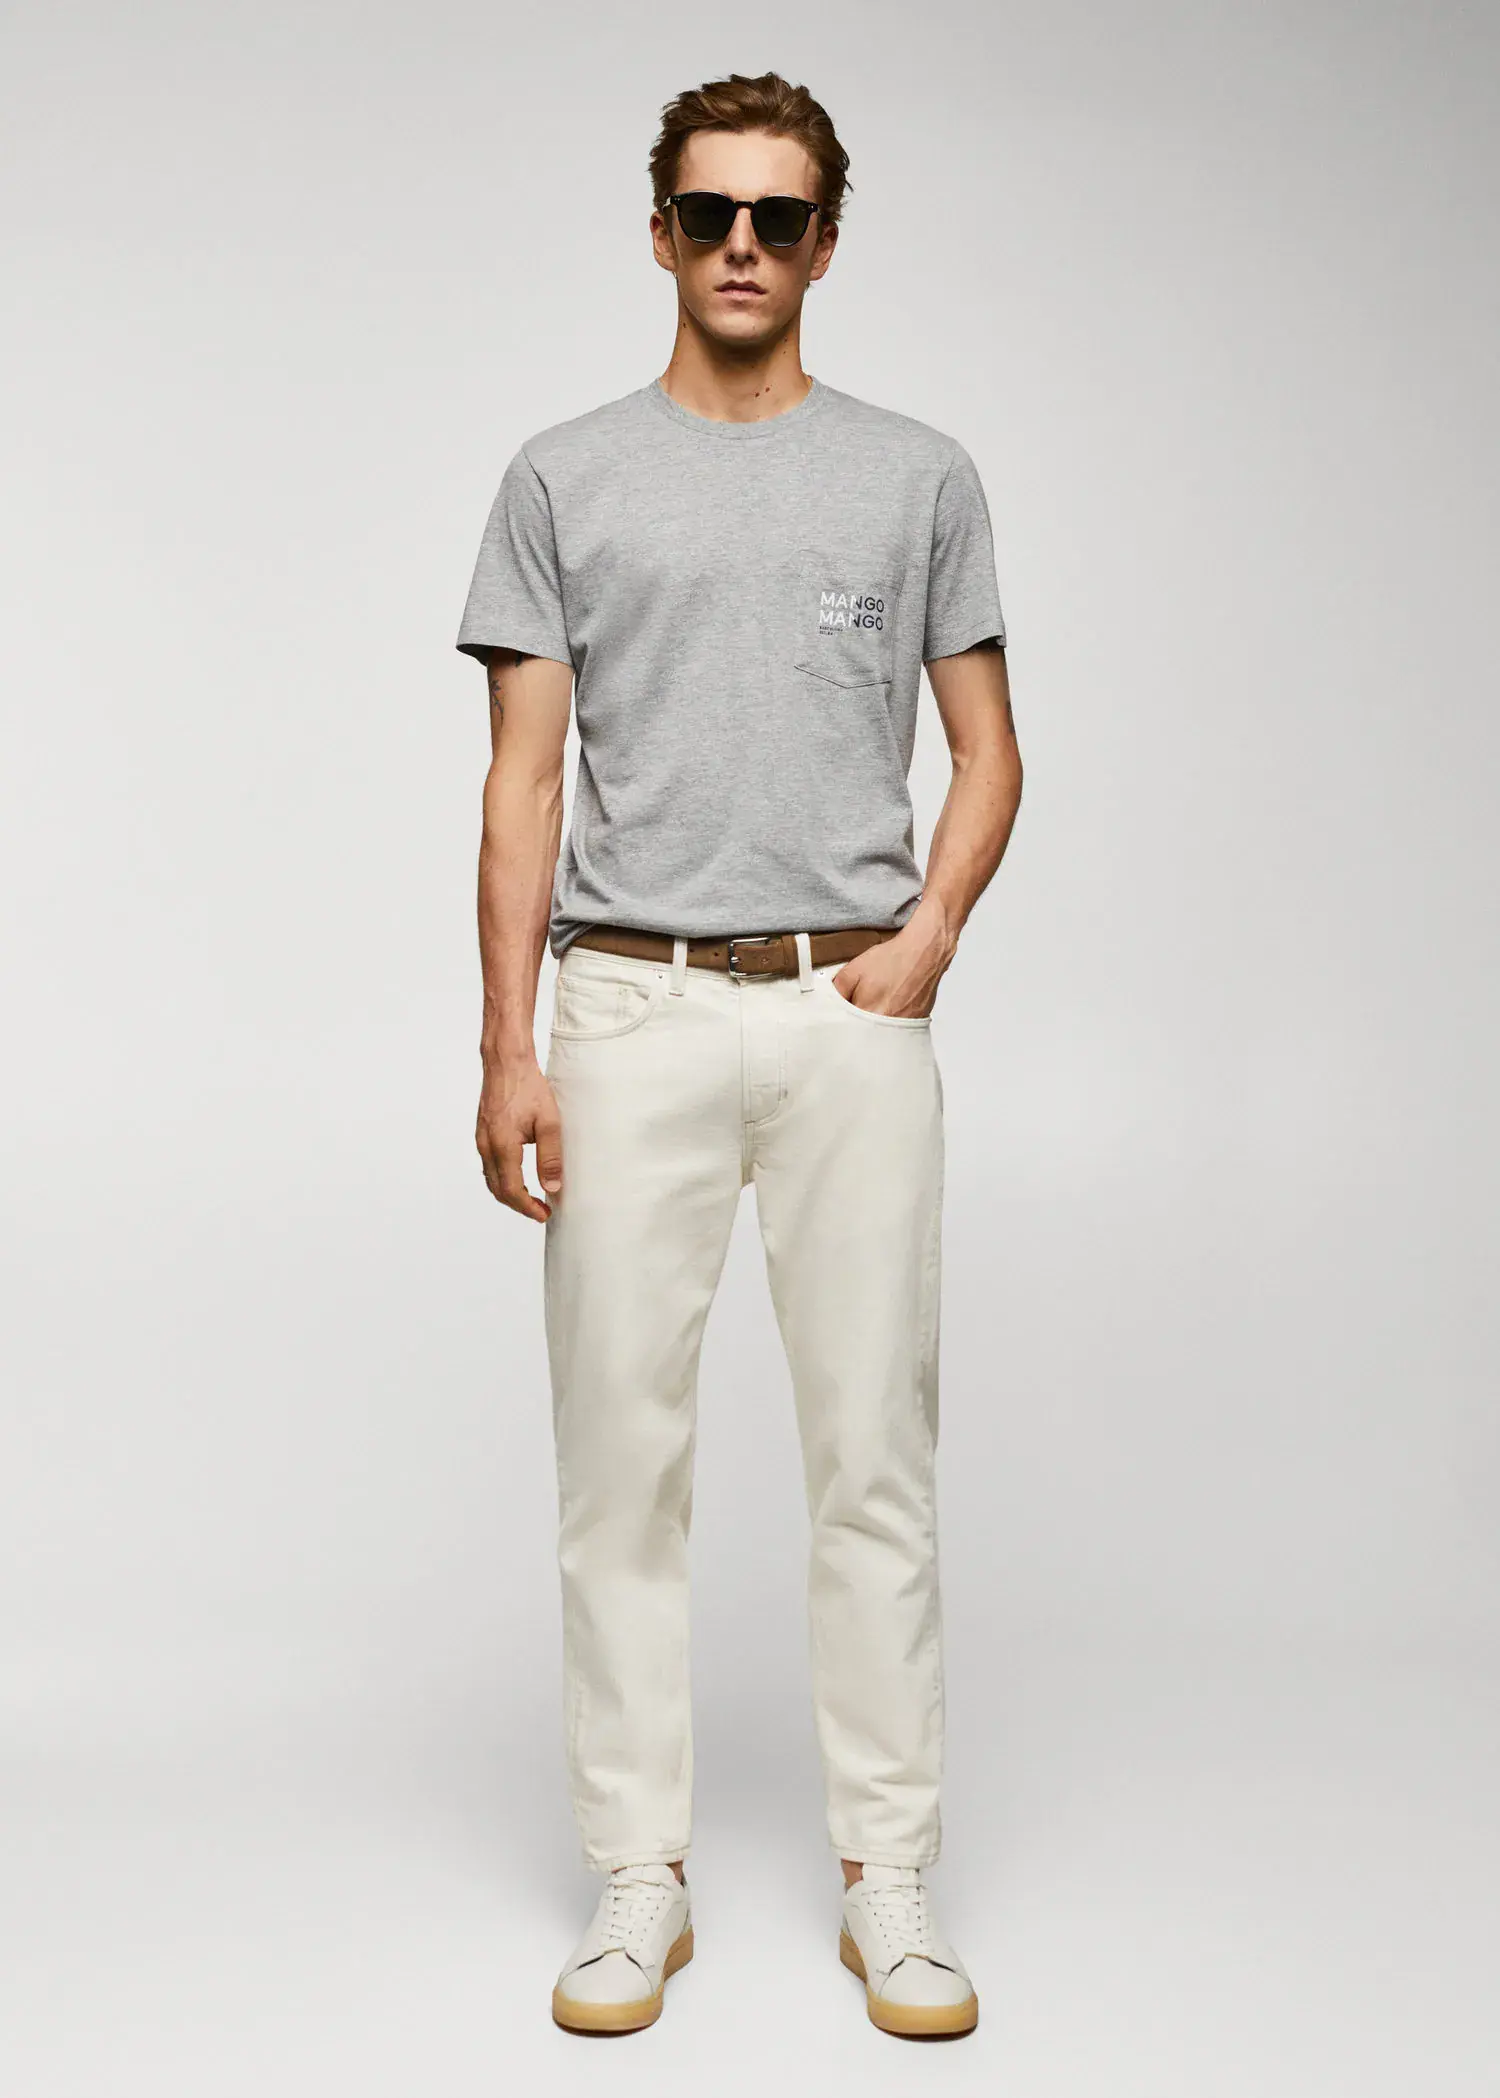 Mango Logo print cotton t-shirt. a man in a gray t-shirt and white pants. 